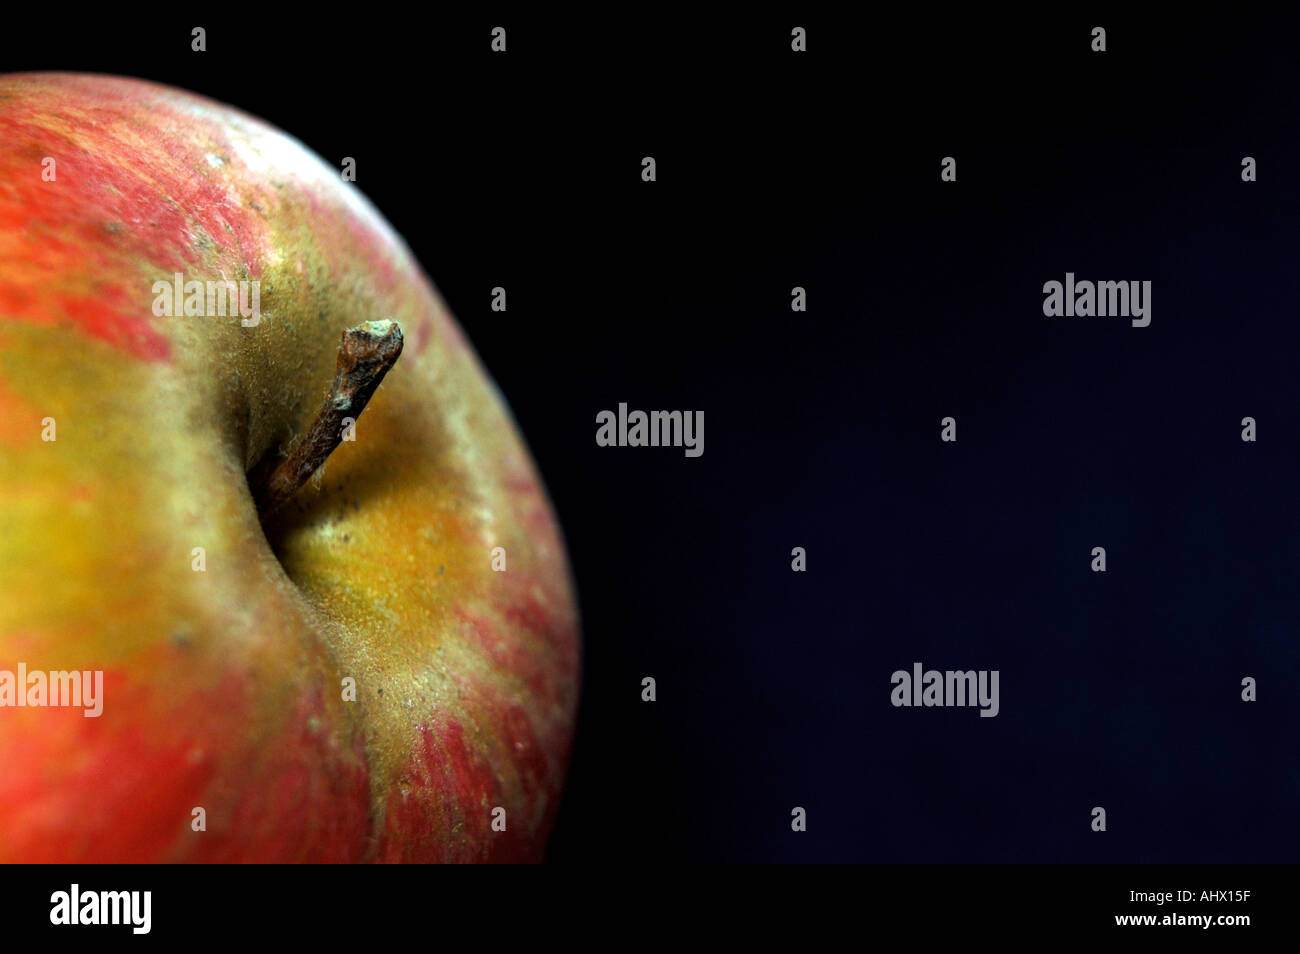 Apple English apples Stock Photo